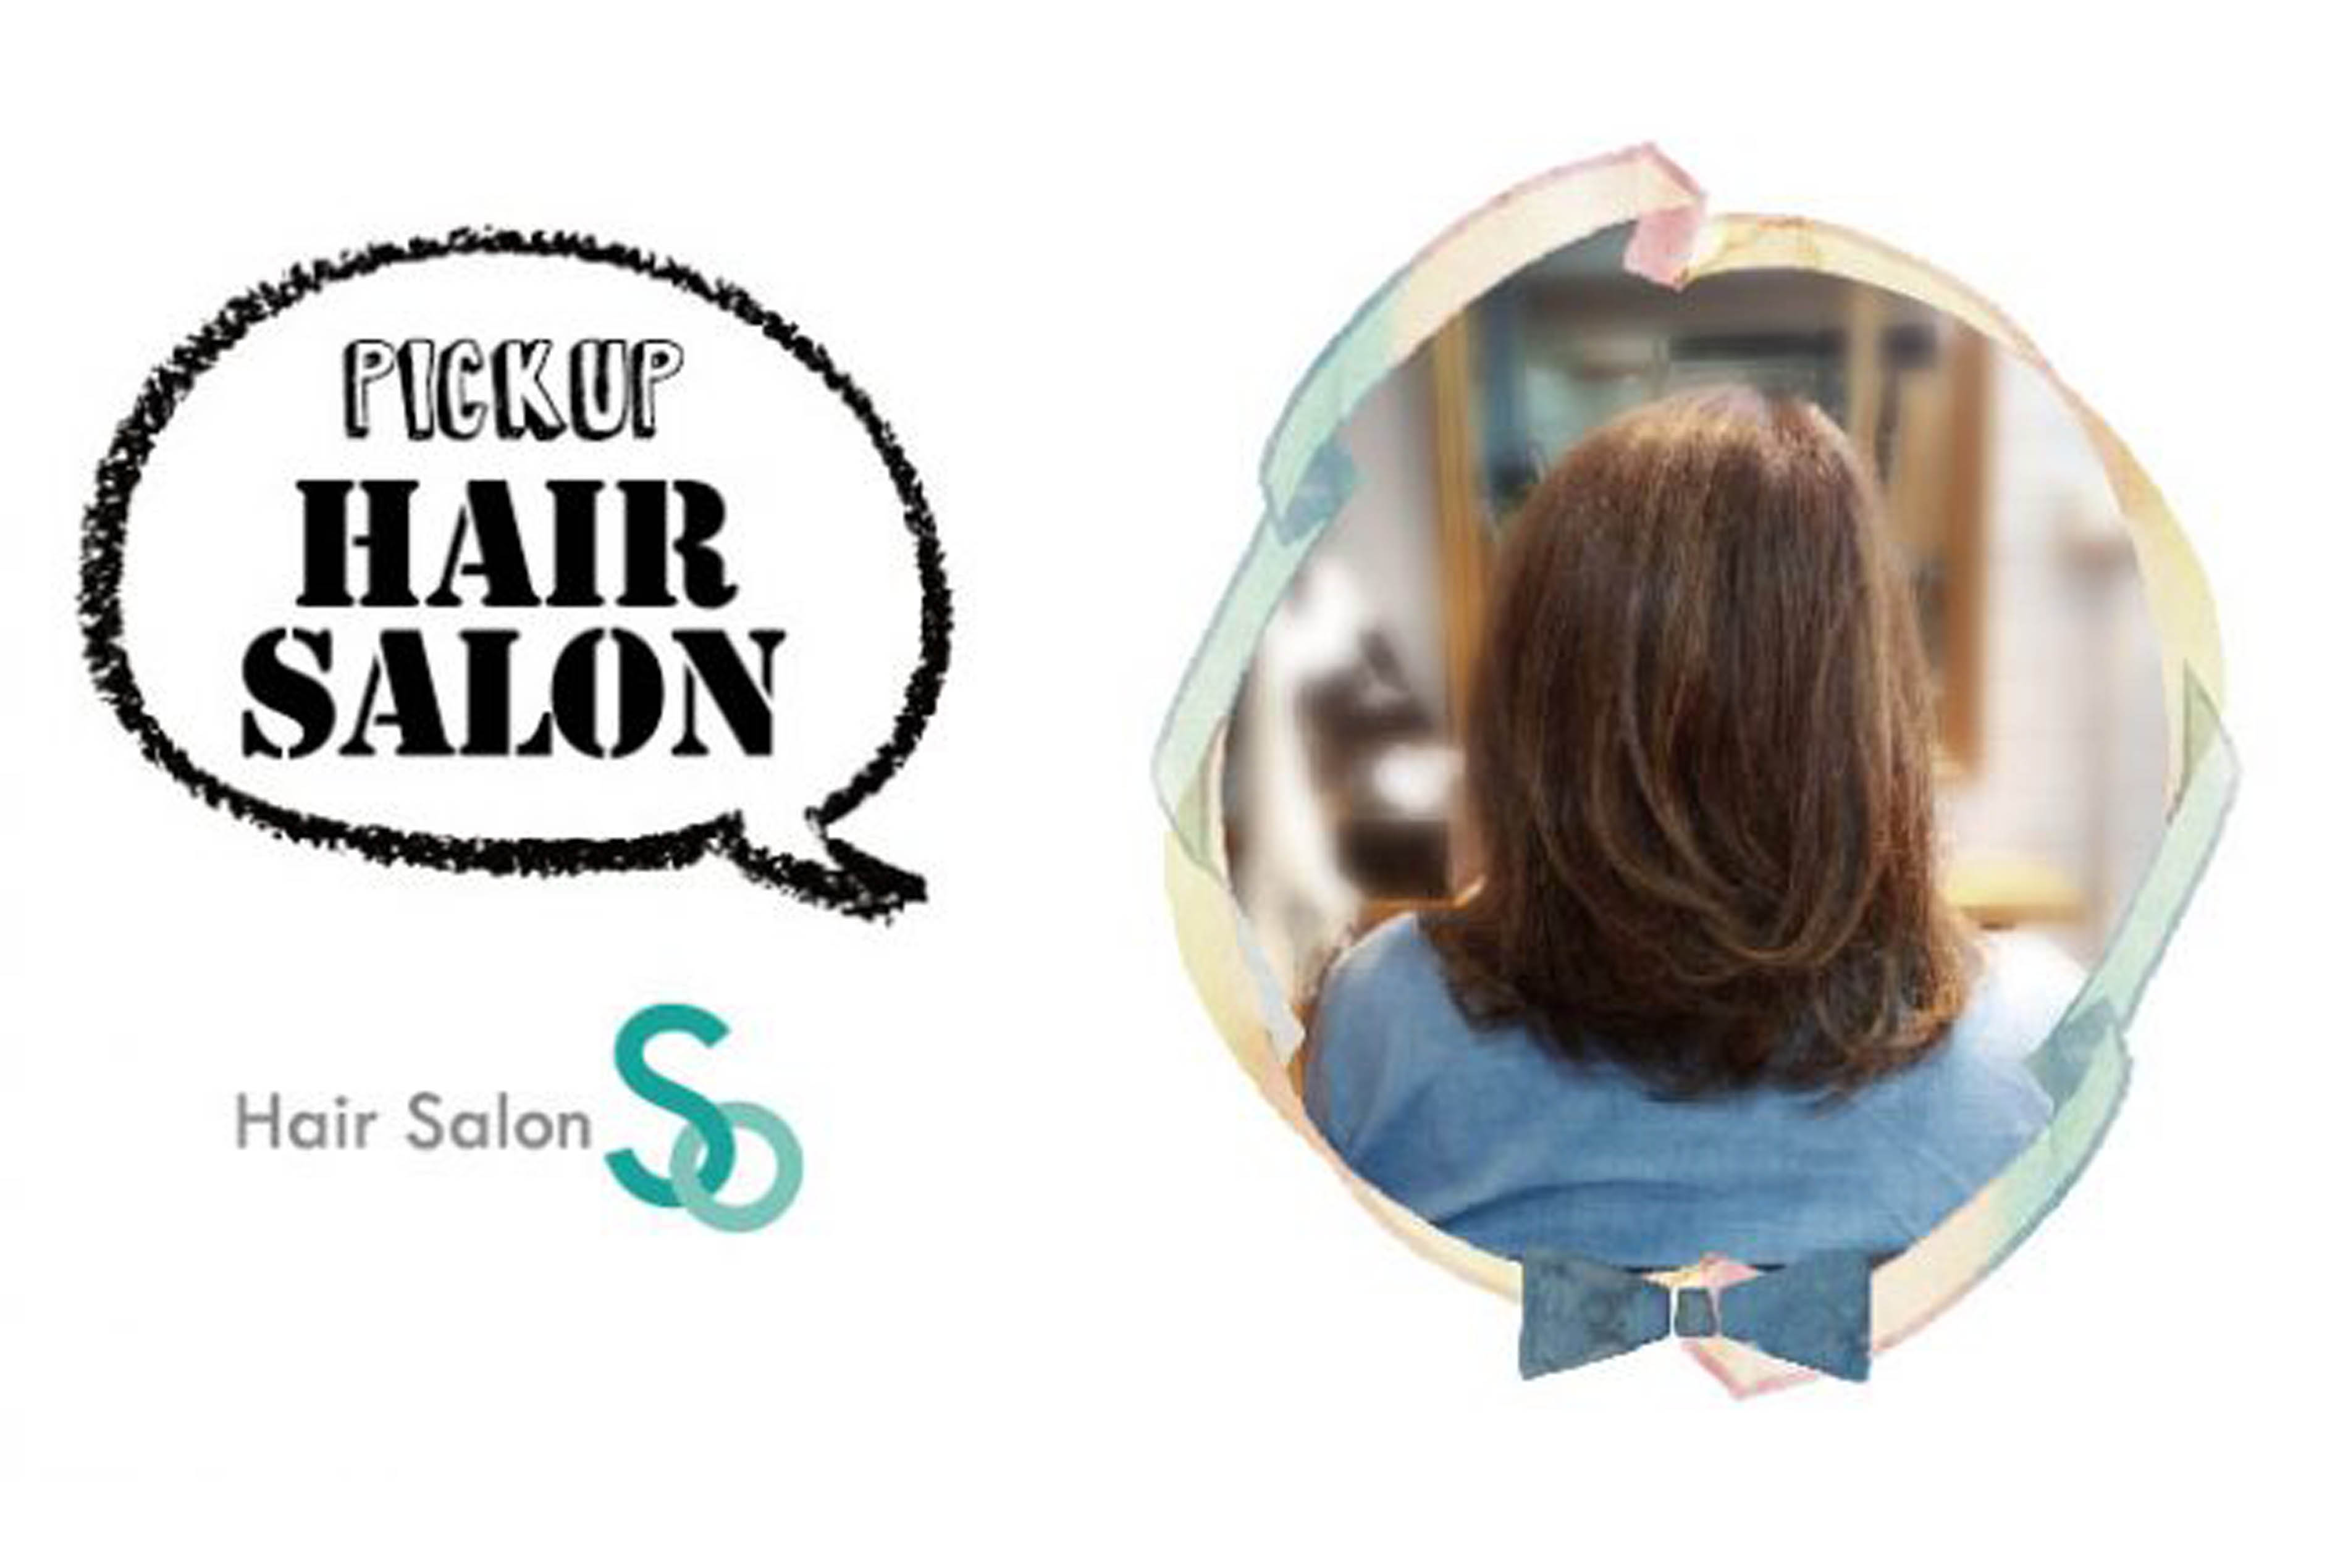 【PICK UP HAIR SARON】　Hair Salon SO - ワイズデジタル【タイで生活する人のための情報サイト】